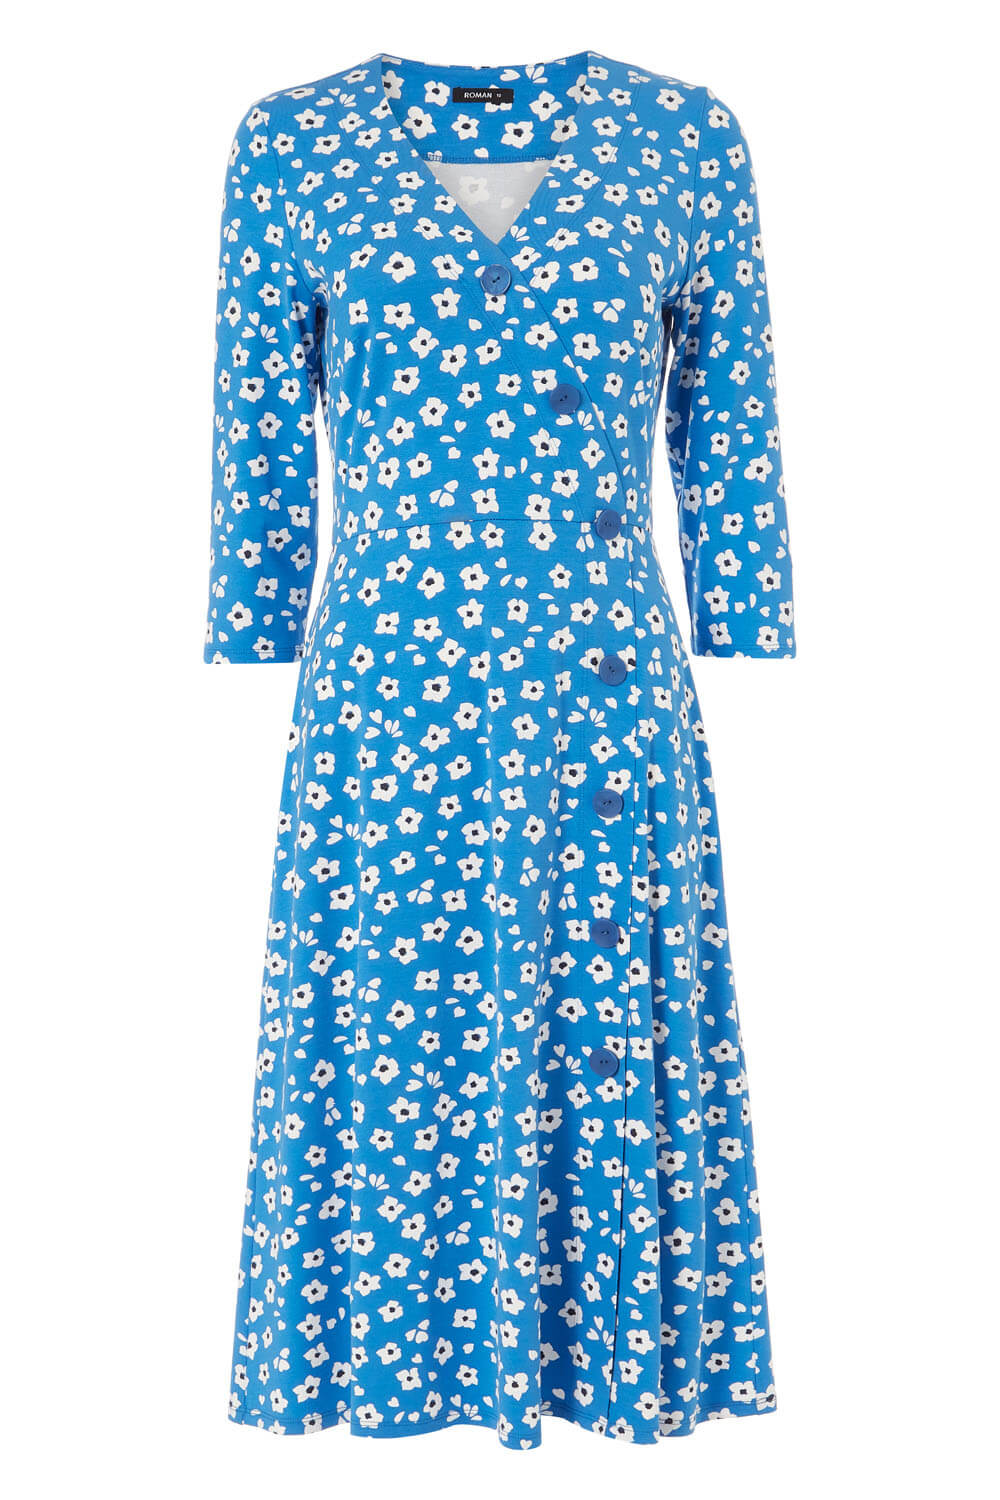 Blue Floral Print Midi Length Tea Dress, Image 4 of 4